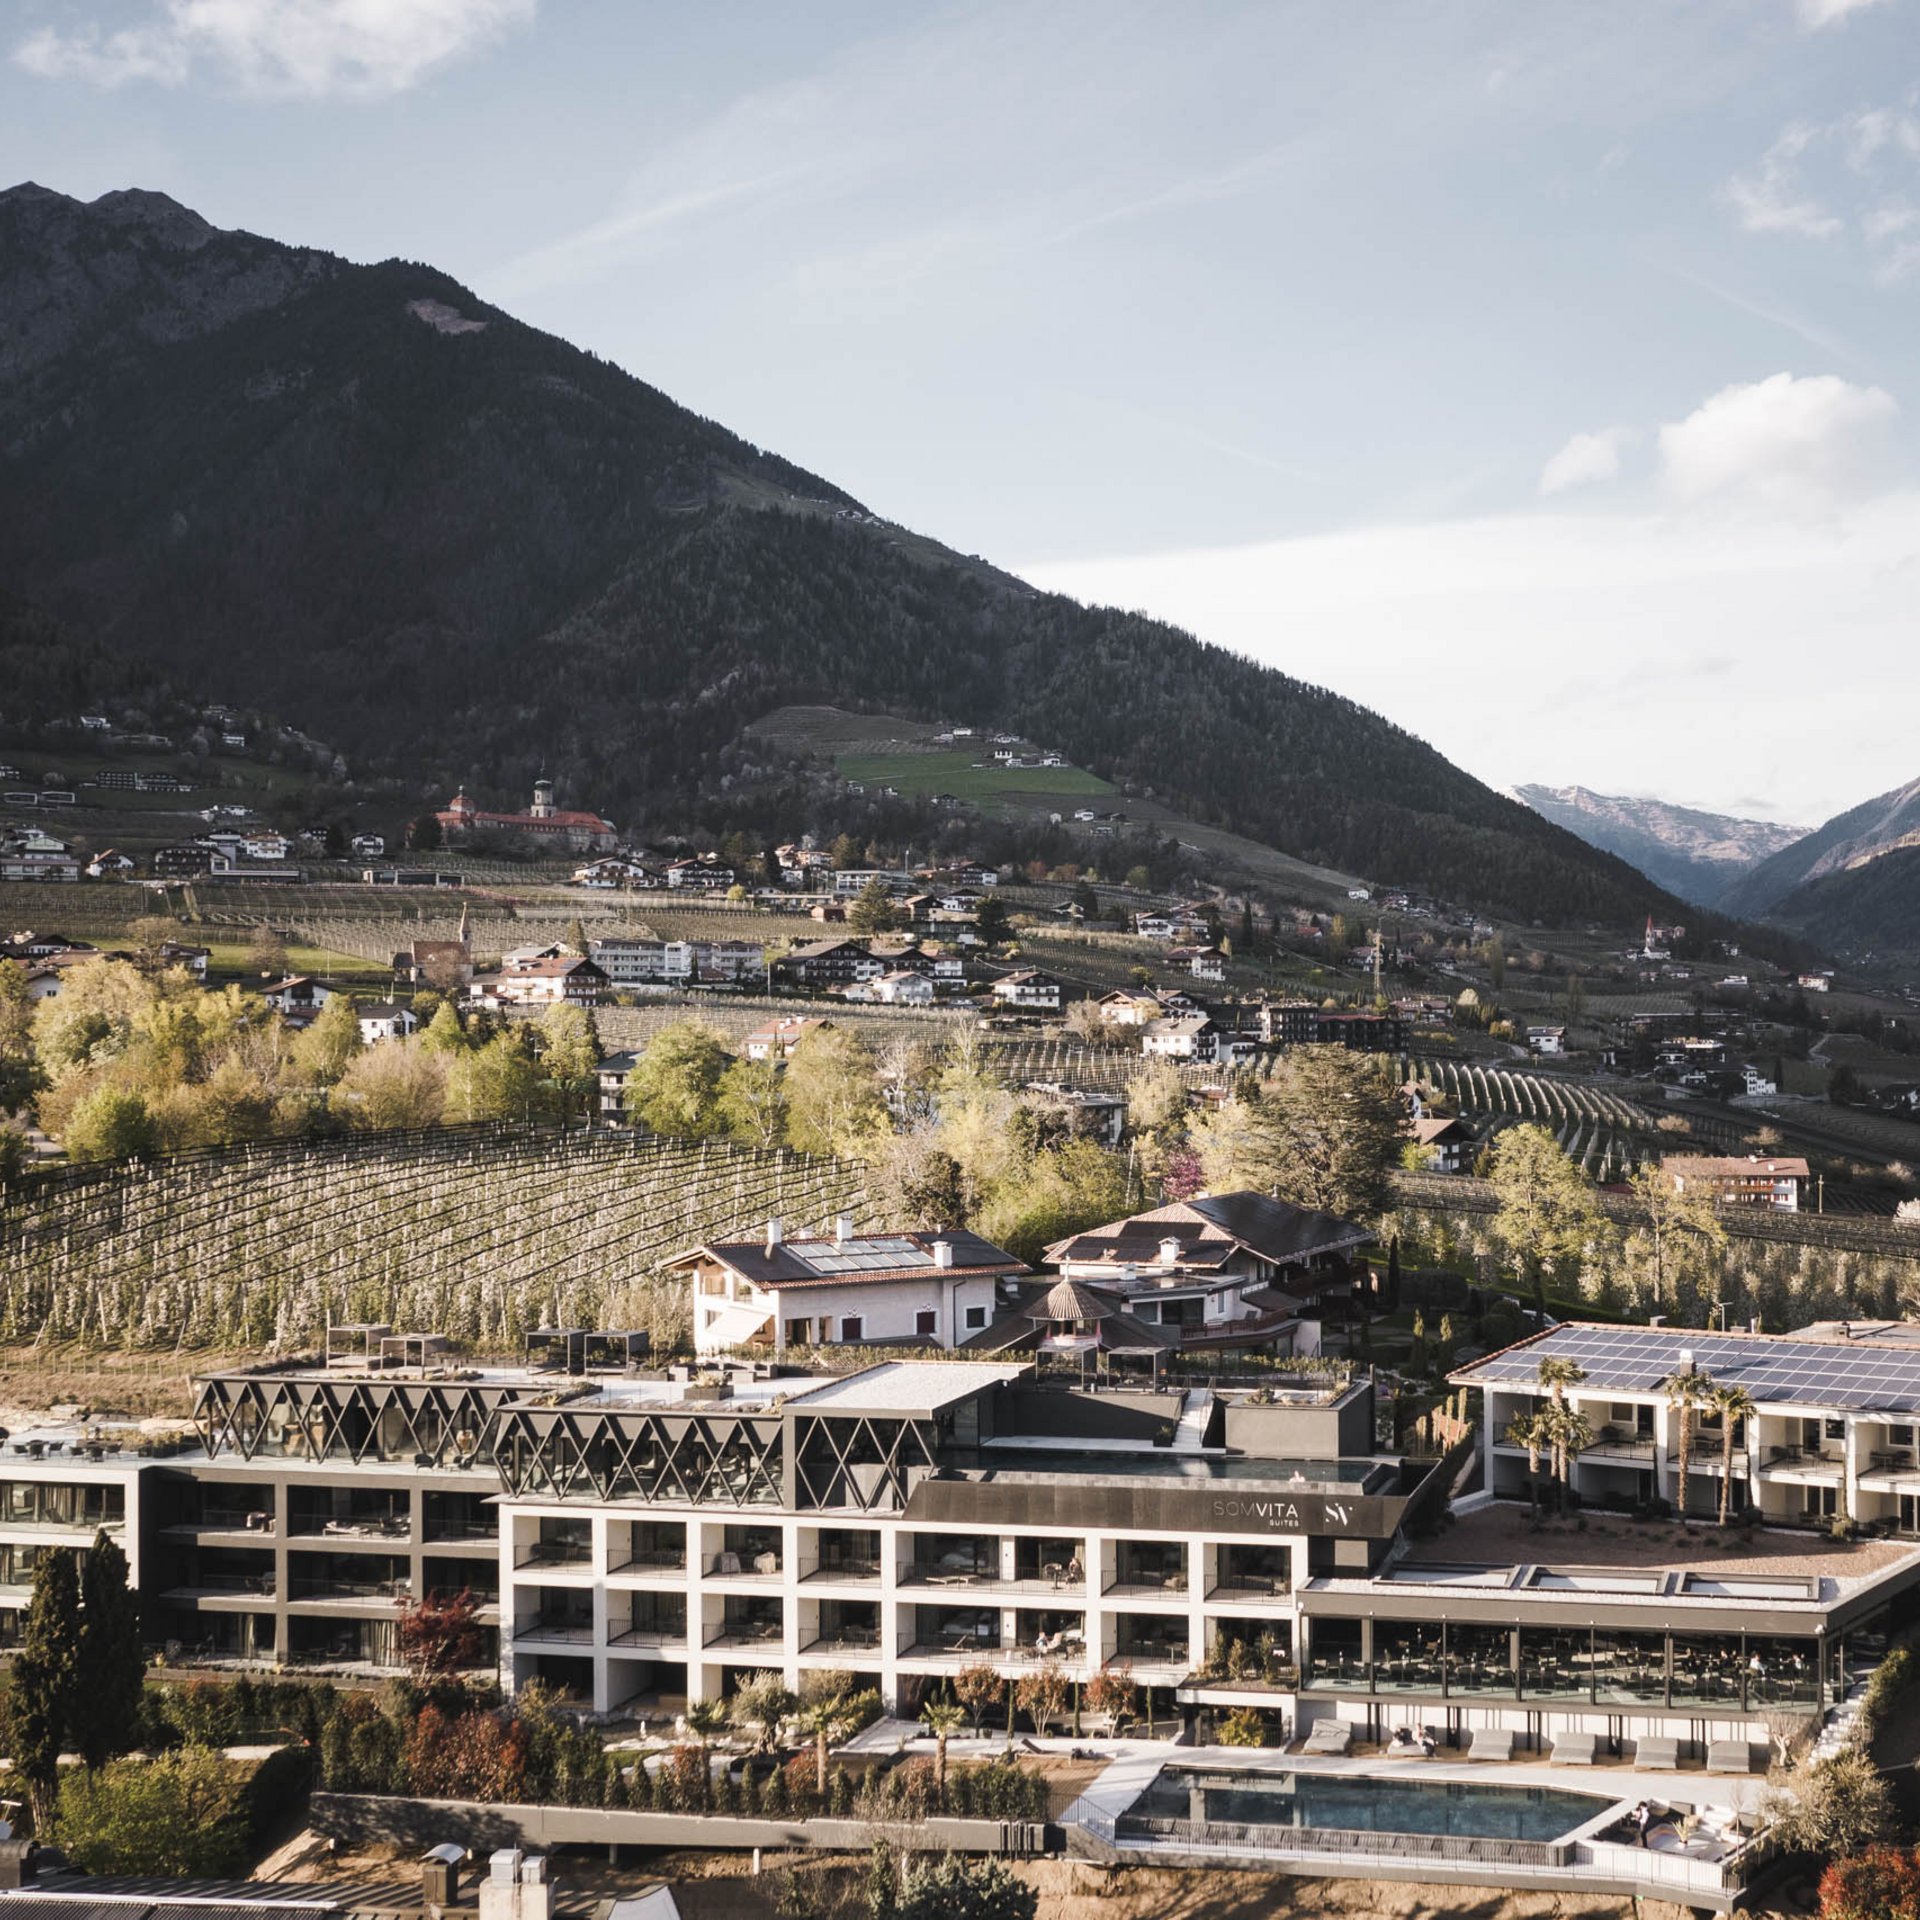 In Dorf Tirol: Hotels mit exklusivem Charakter